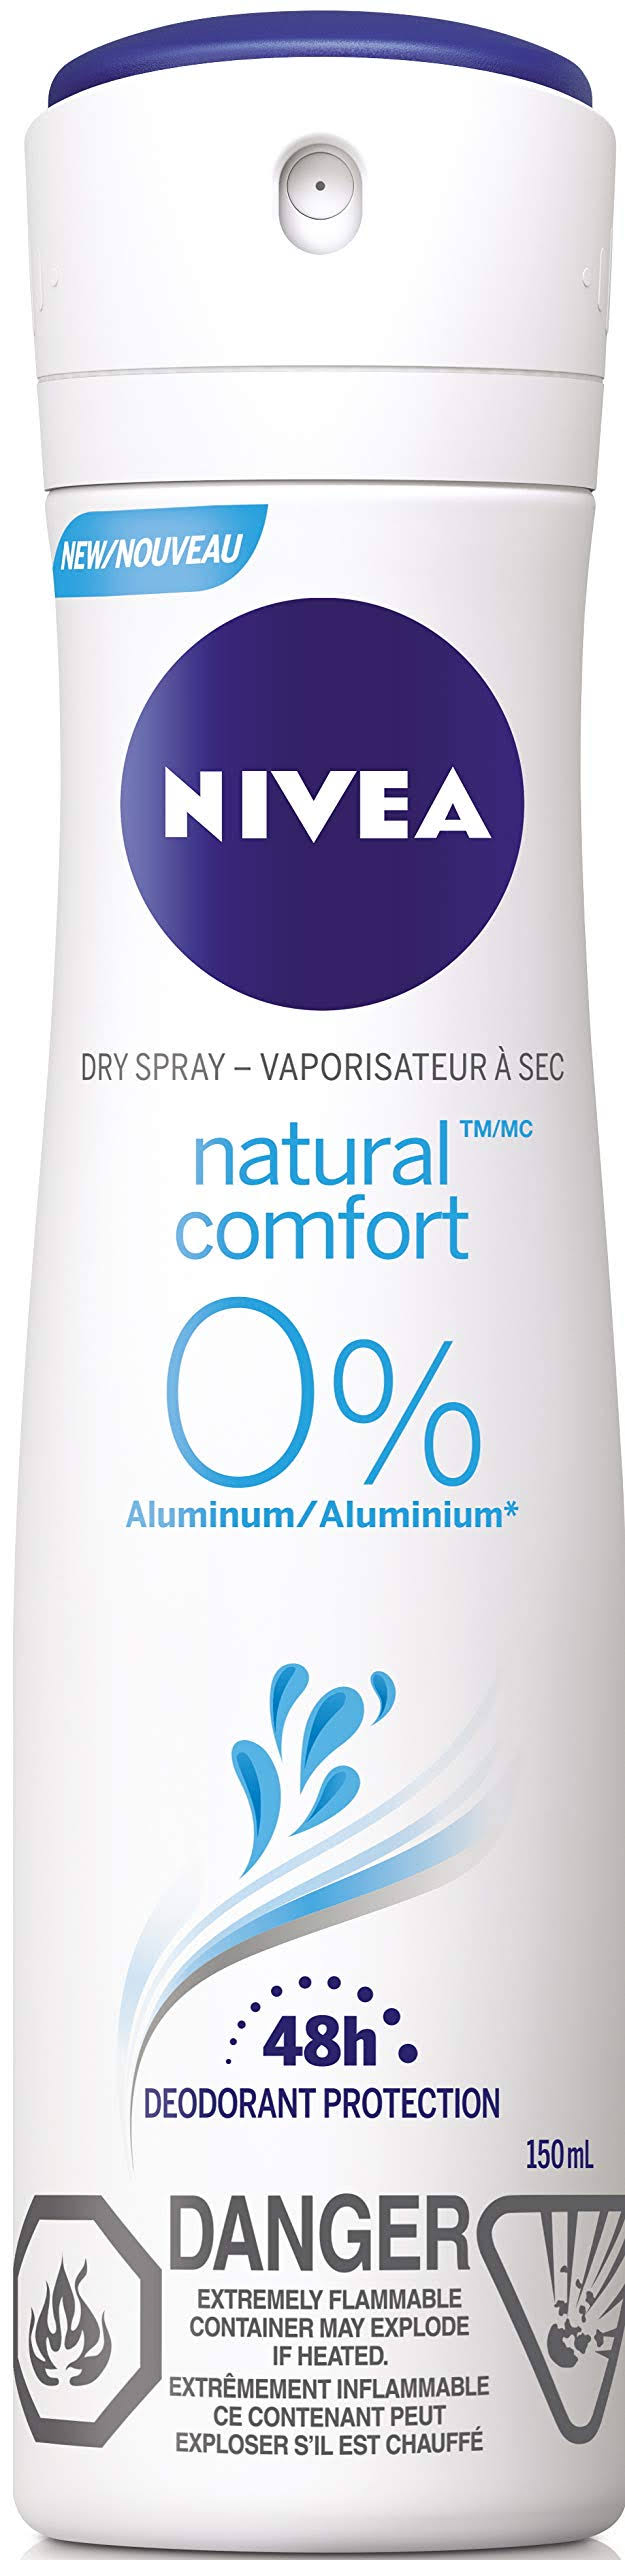 Nivea Natural Comfort 0% Aluminum Dry Deodorant Spray